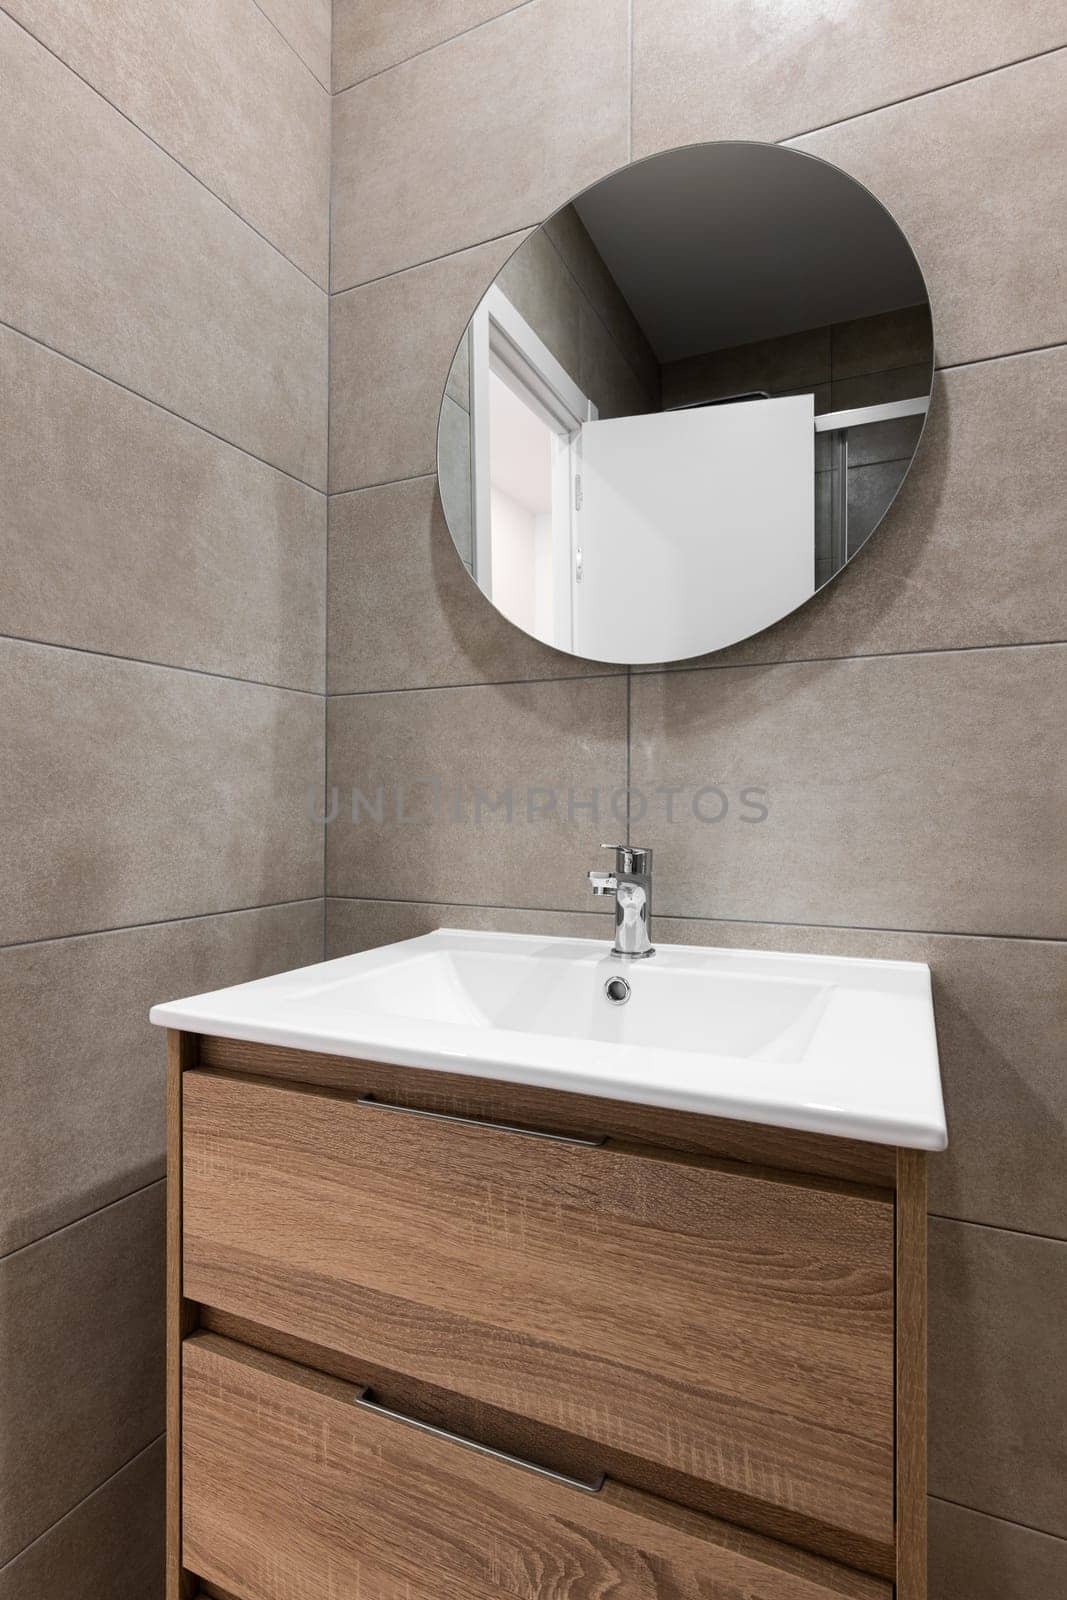 Modern bathroom with a sleek sink, wooden furniture and a round mirror.